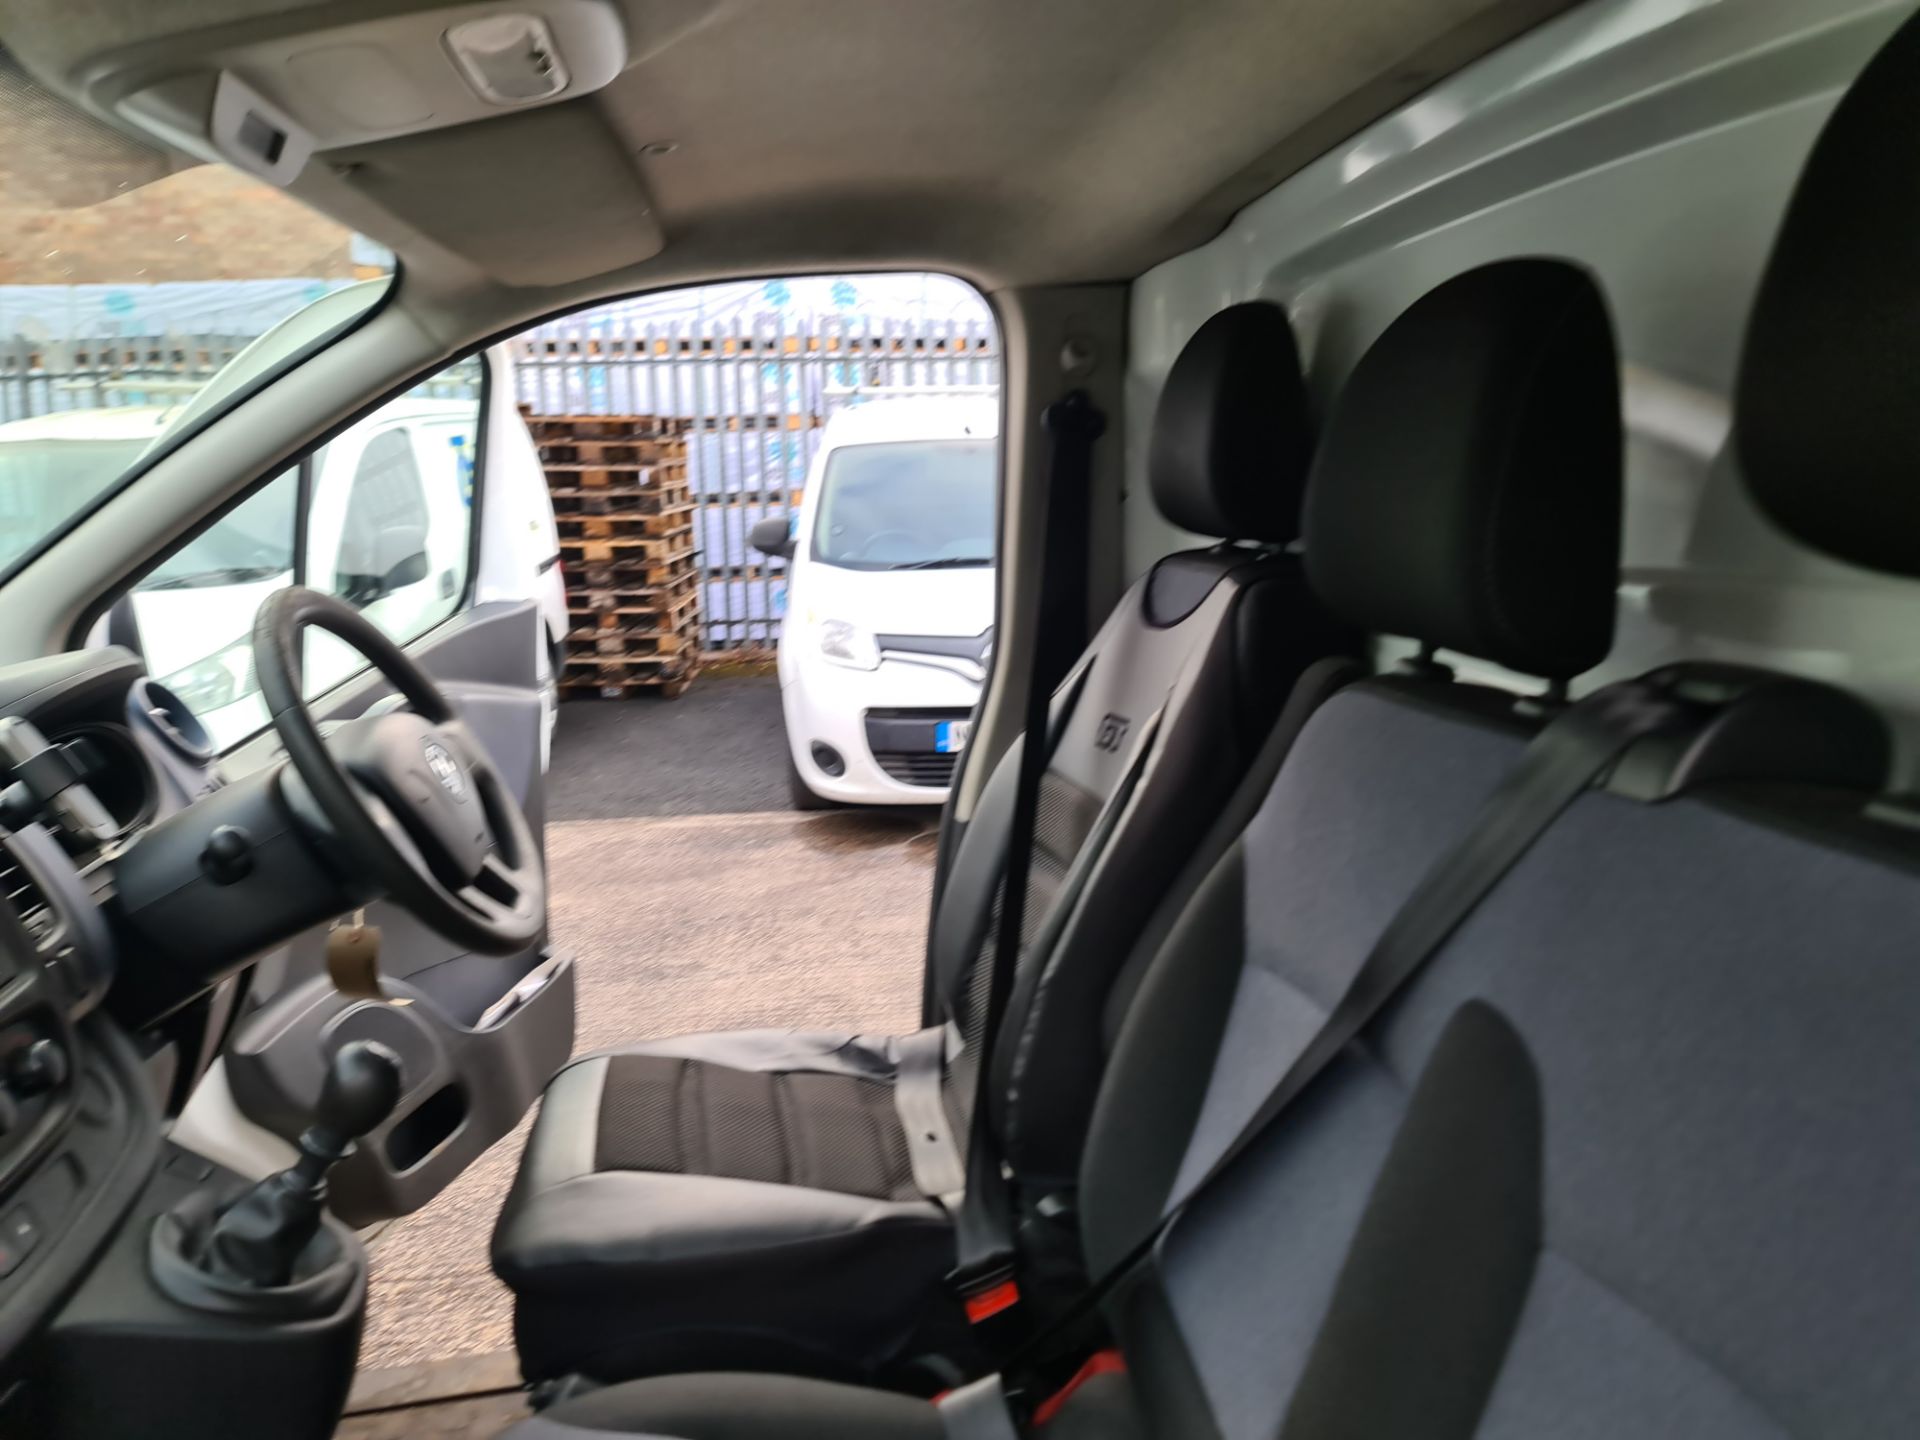 2015 Vauxhall Vivaro 2900 CDTi panel van - Image 63 of 81